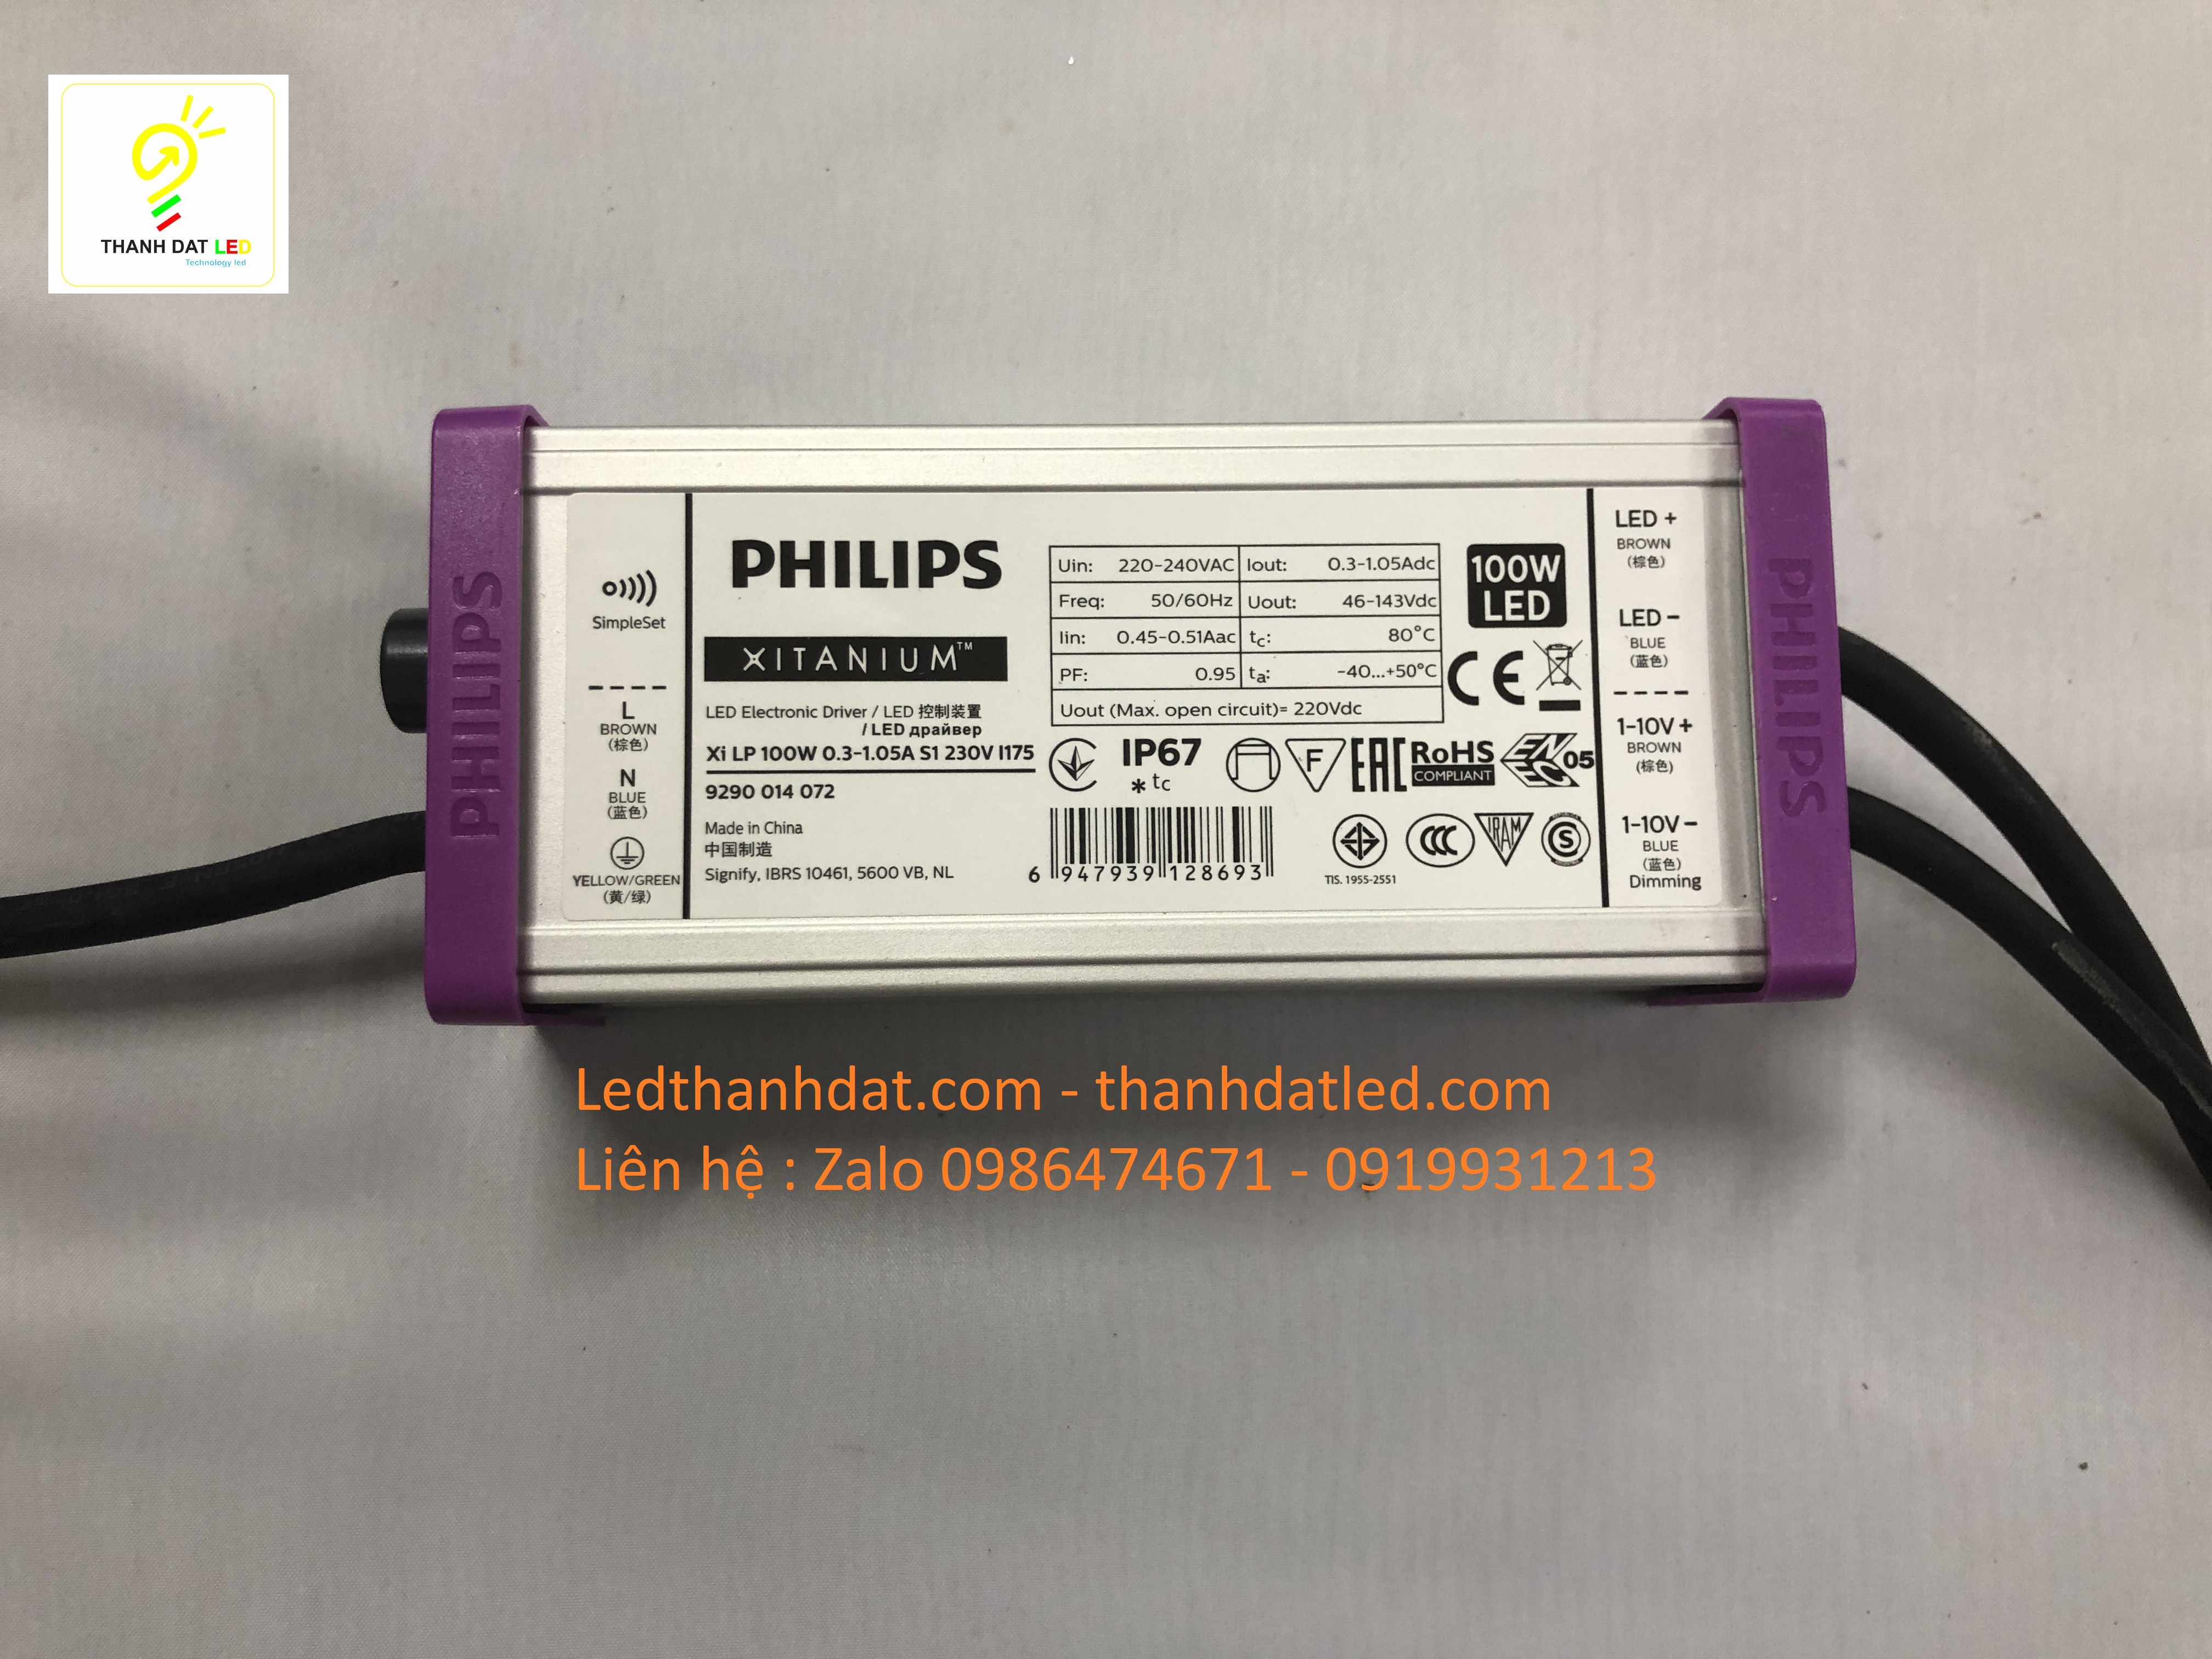 Nguồn Philips 100w Xitanium dimer 5